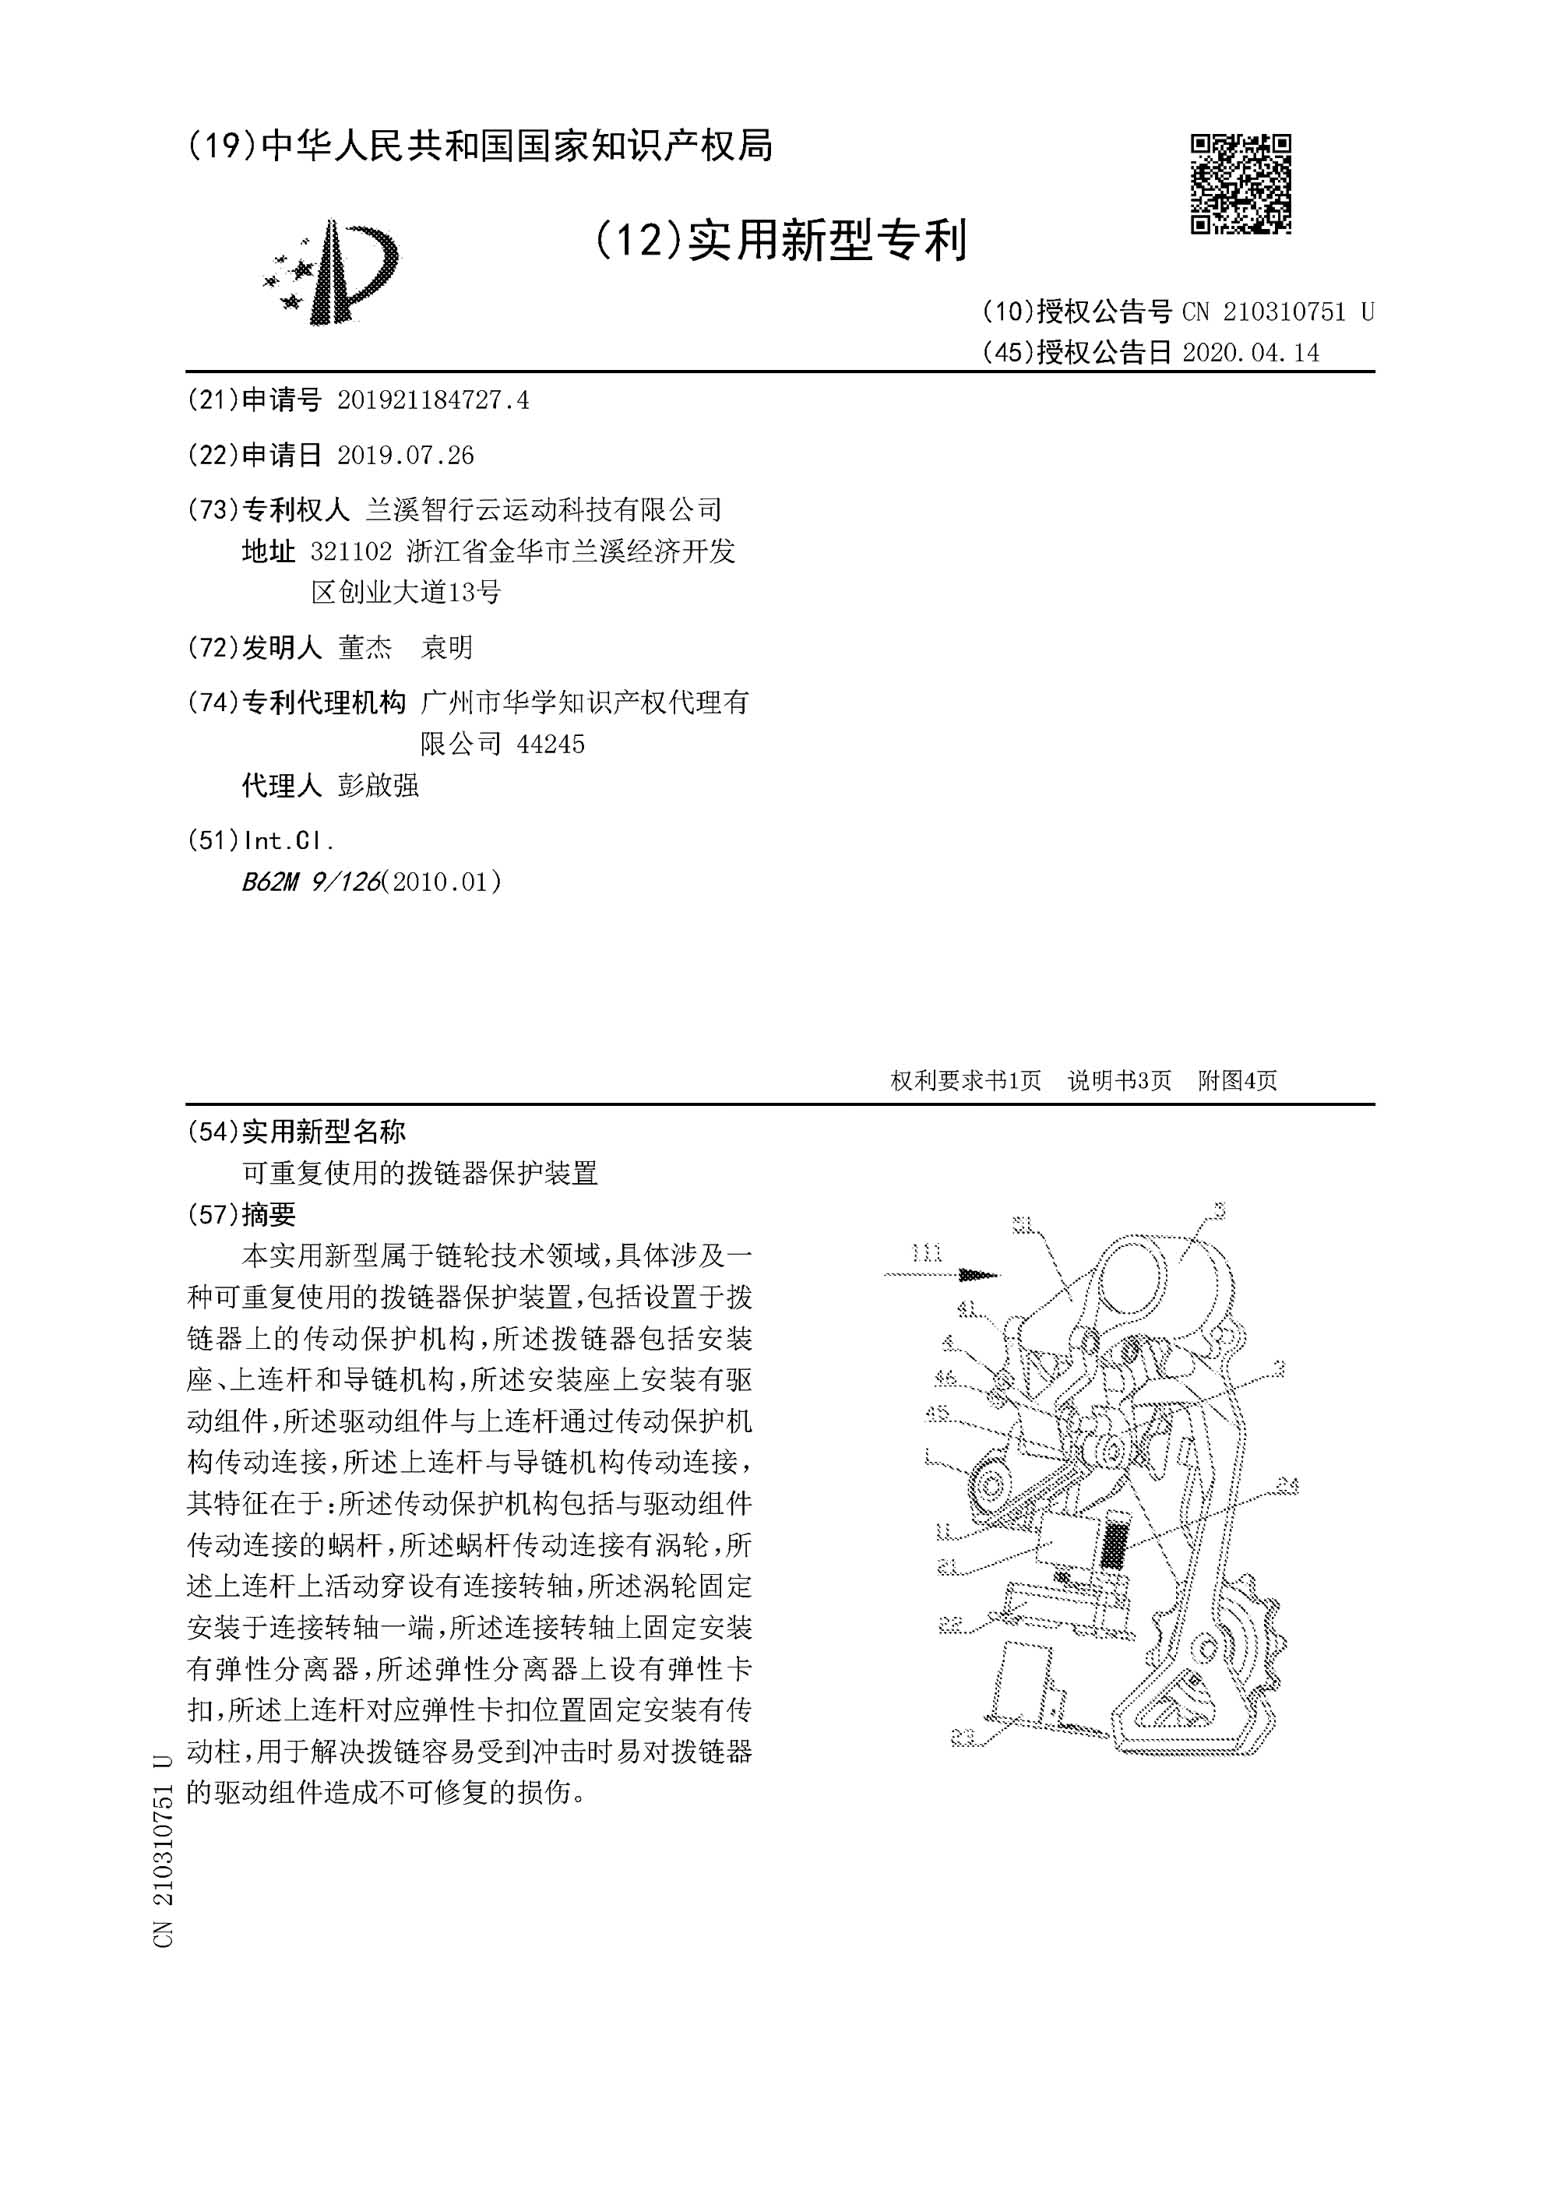 Chinese Utility Model # CN210310751U - Wheel Top page 01 main image